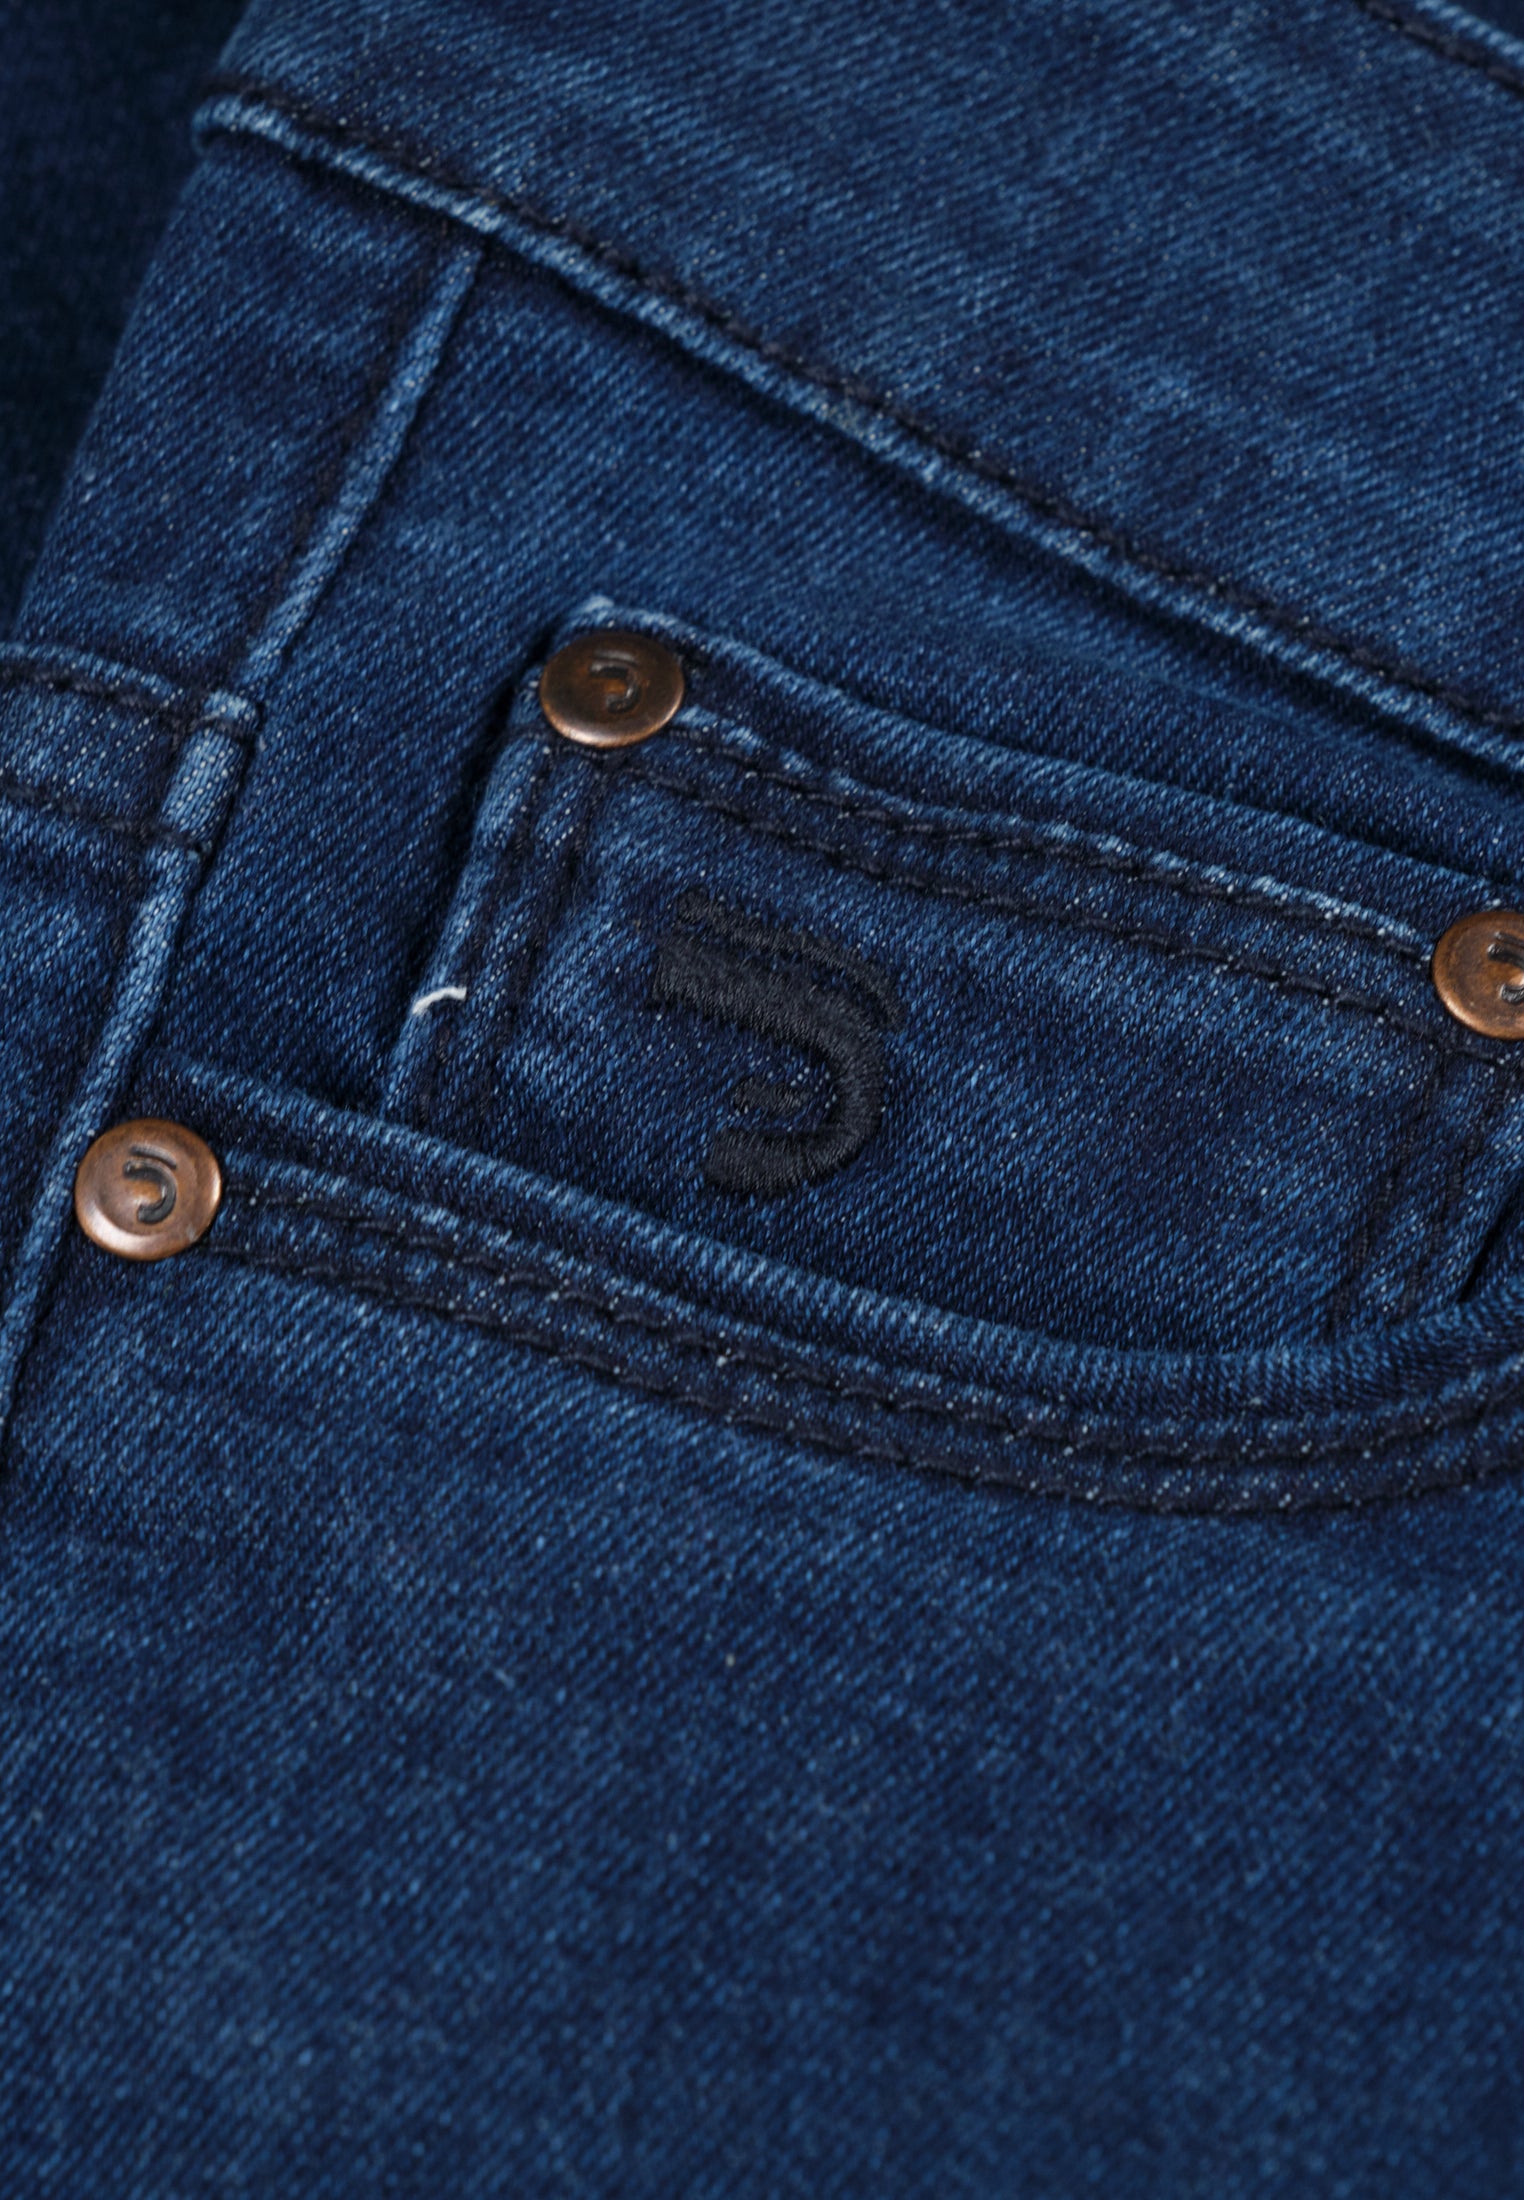 Jeans Femme 02 Medium Blue Denim Slim Fit | J&JOY.